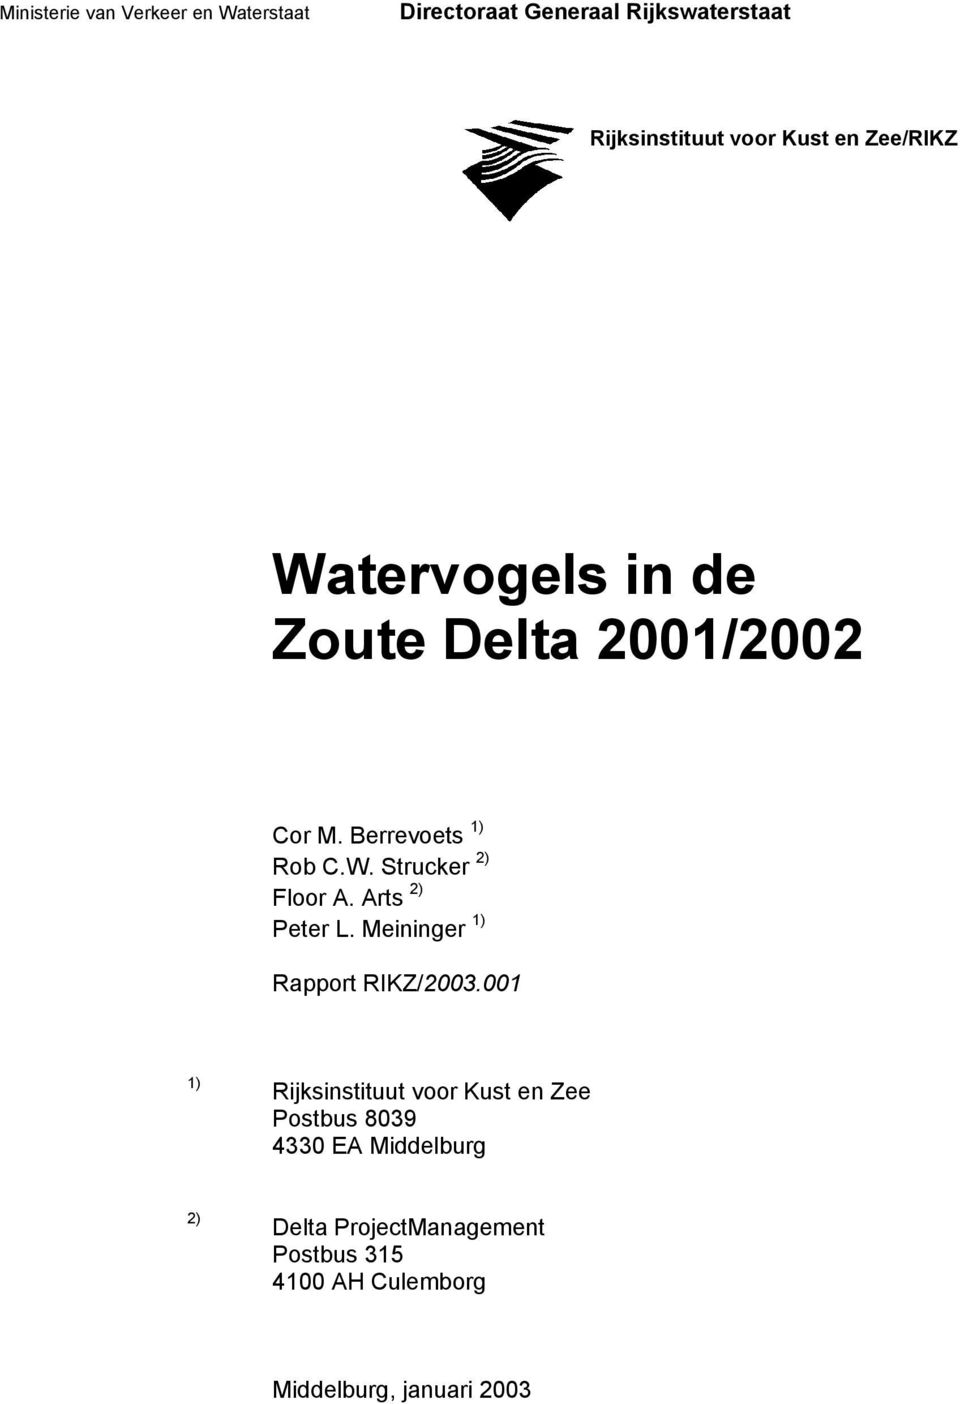 Arts 2) Peter L. Meininger 1) Rapport RIKZ/23.